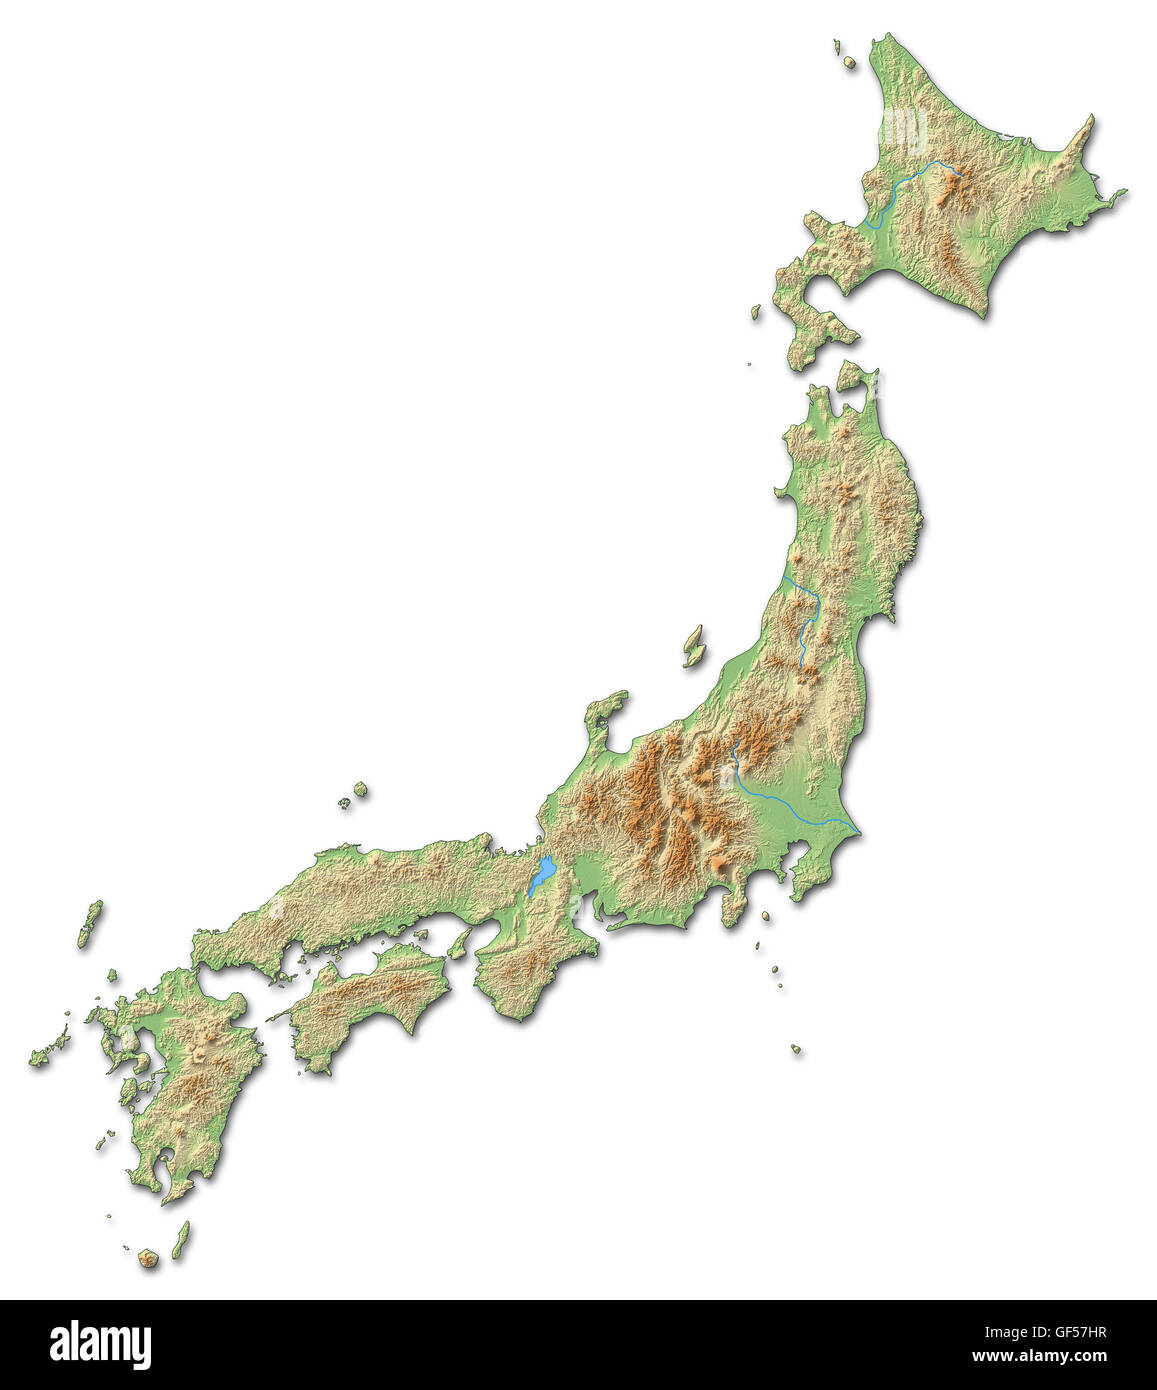 Japon - relief • Carte •